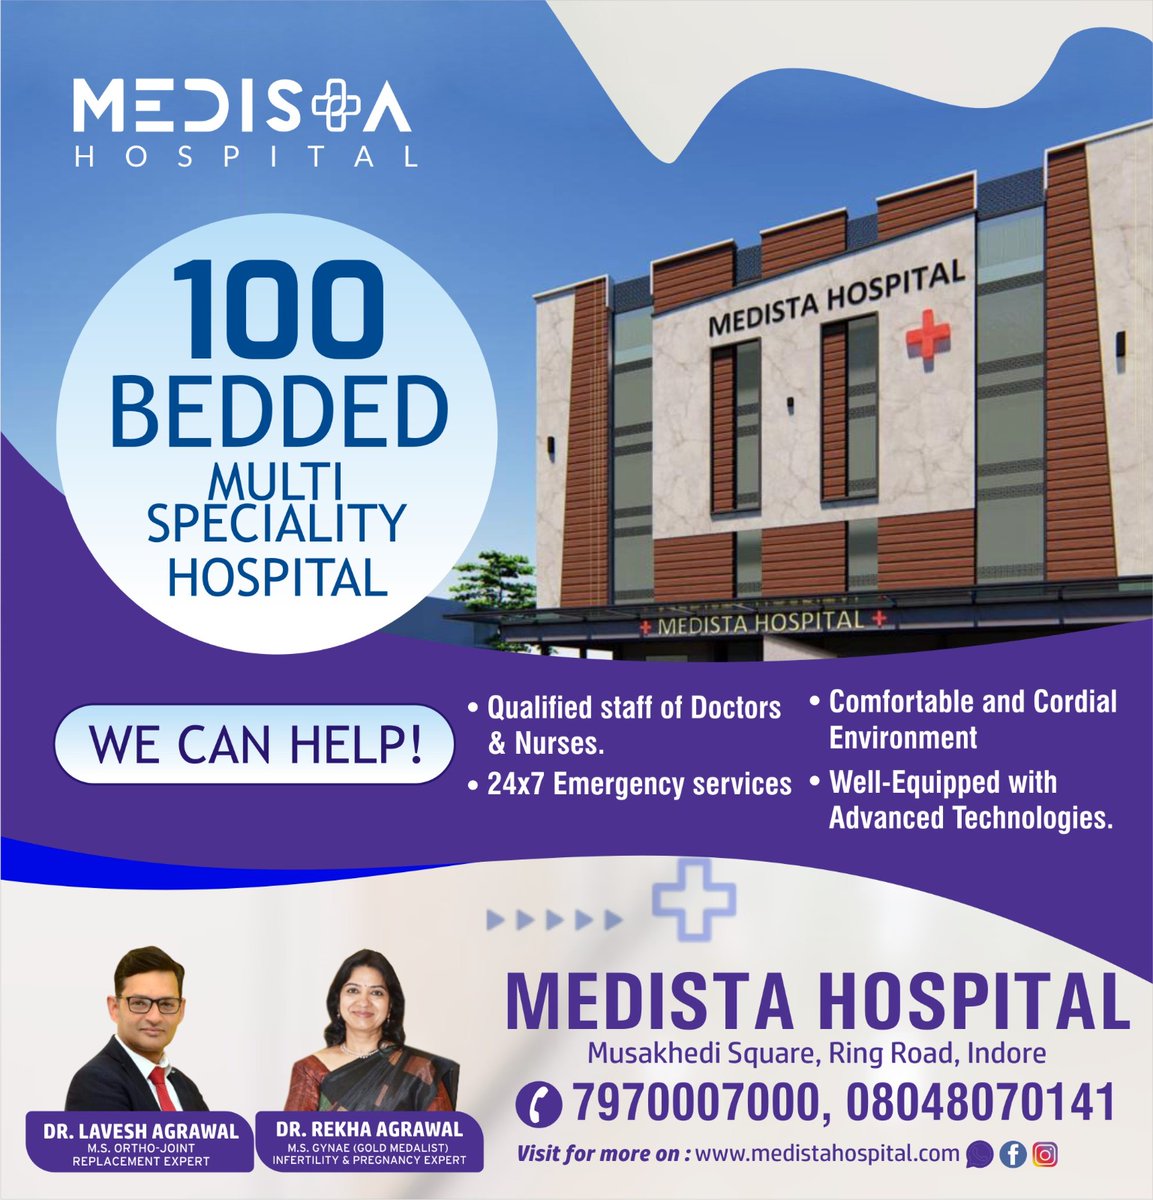 Best 100-Bedded Multi-Specialty Hospital in Indore! #medicine #EmergencyCare #TraumaCare #HospitalHeroes #emergency #emergencyservices #ambulance #AdvancedTechnology #medicalservice #besthospitalhospitalservices #medista #medistahospital #indore #hospital #indorehospital